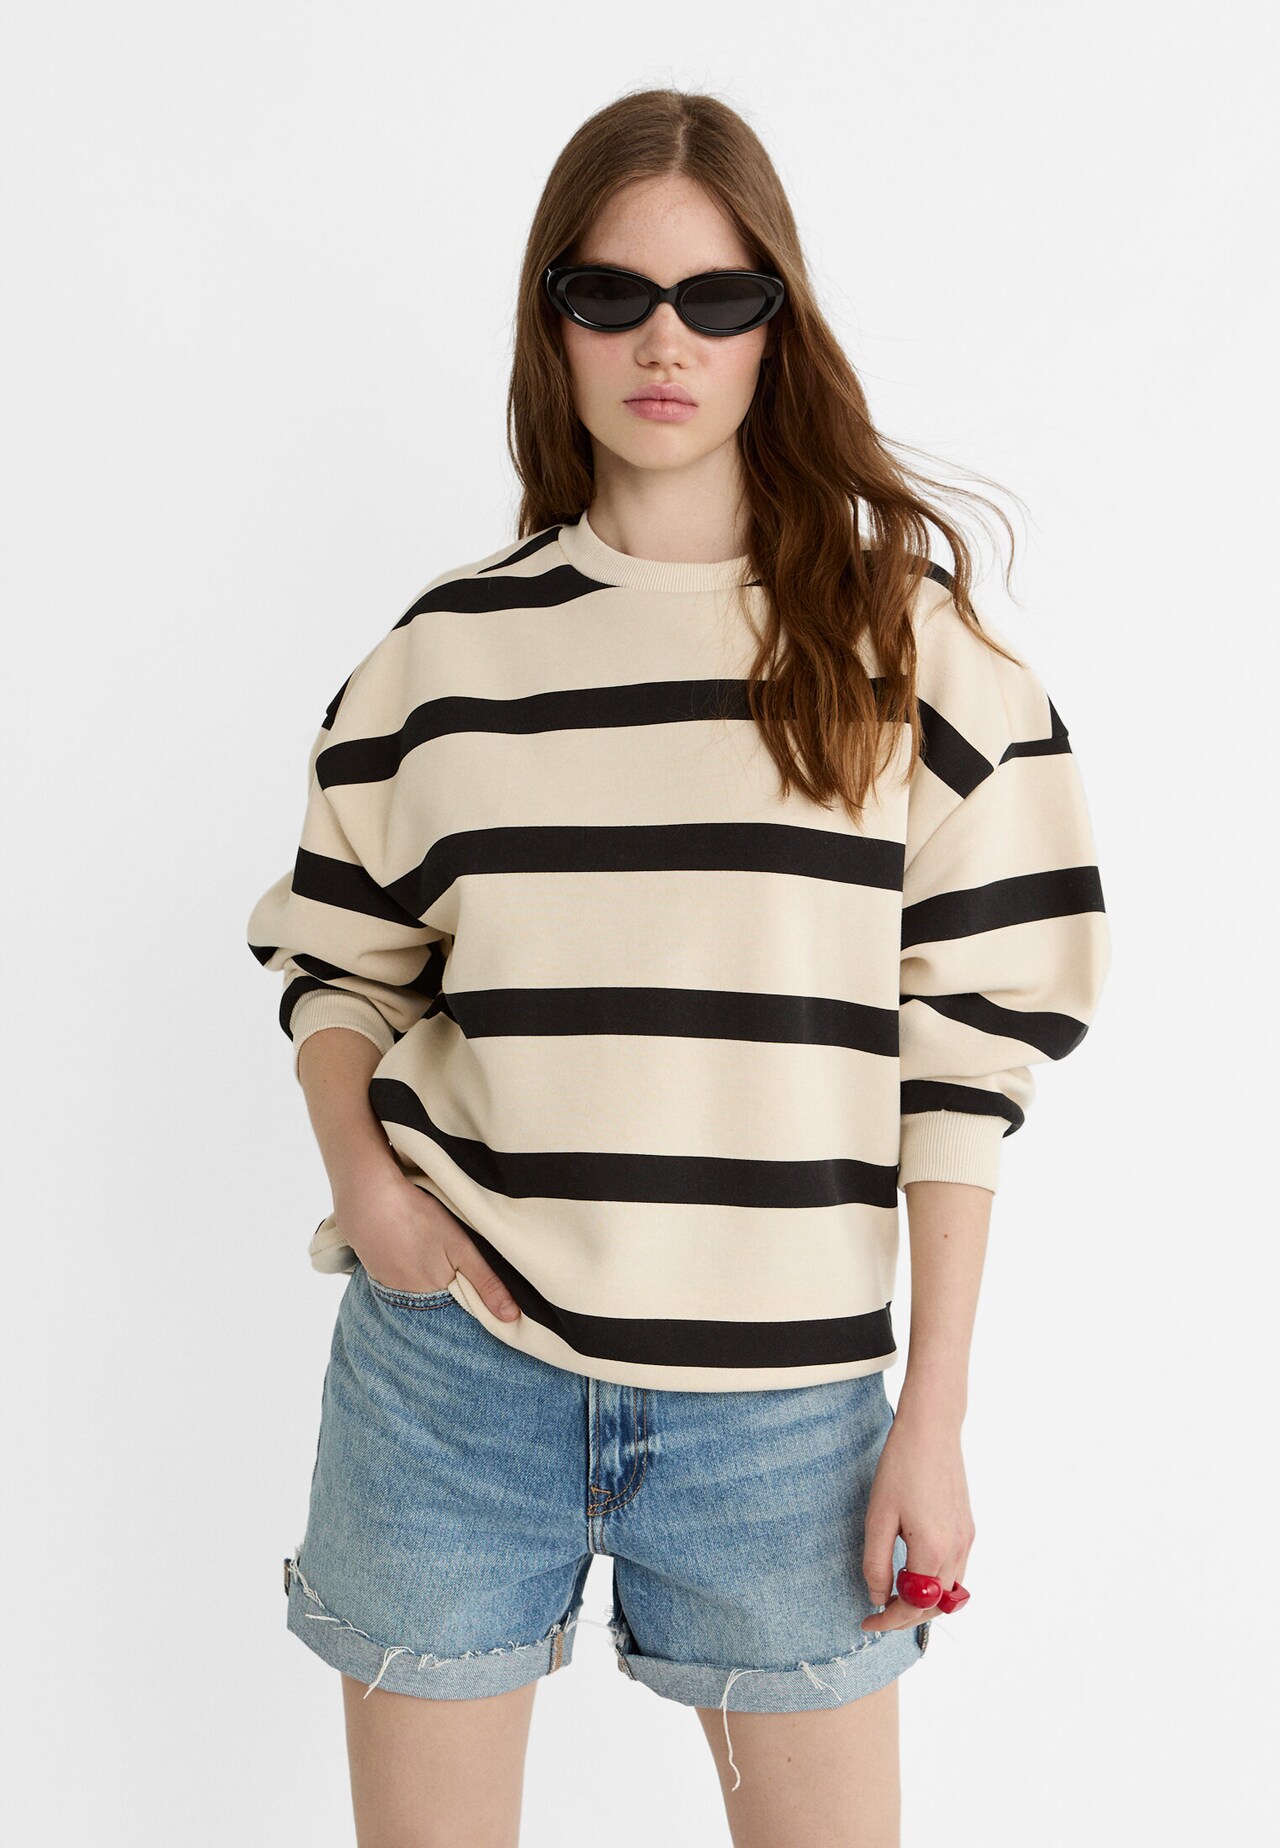 Oversized striped sweatshirt - Women's fashion